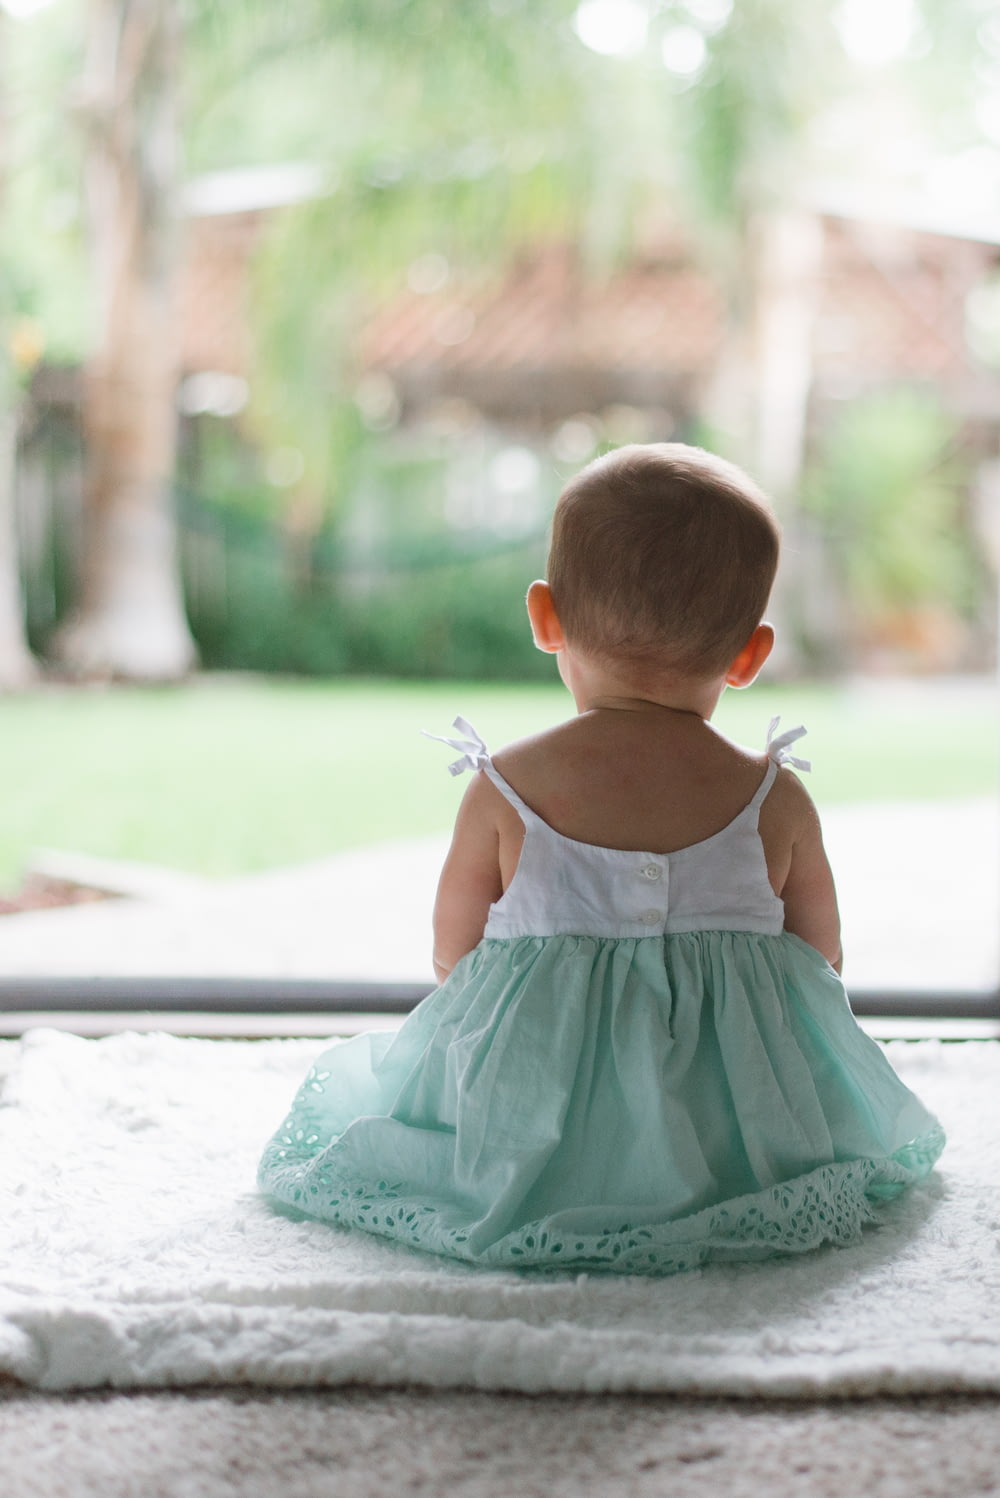 selective focus photo of toddler wearing sleeveless dress sitting on floor